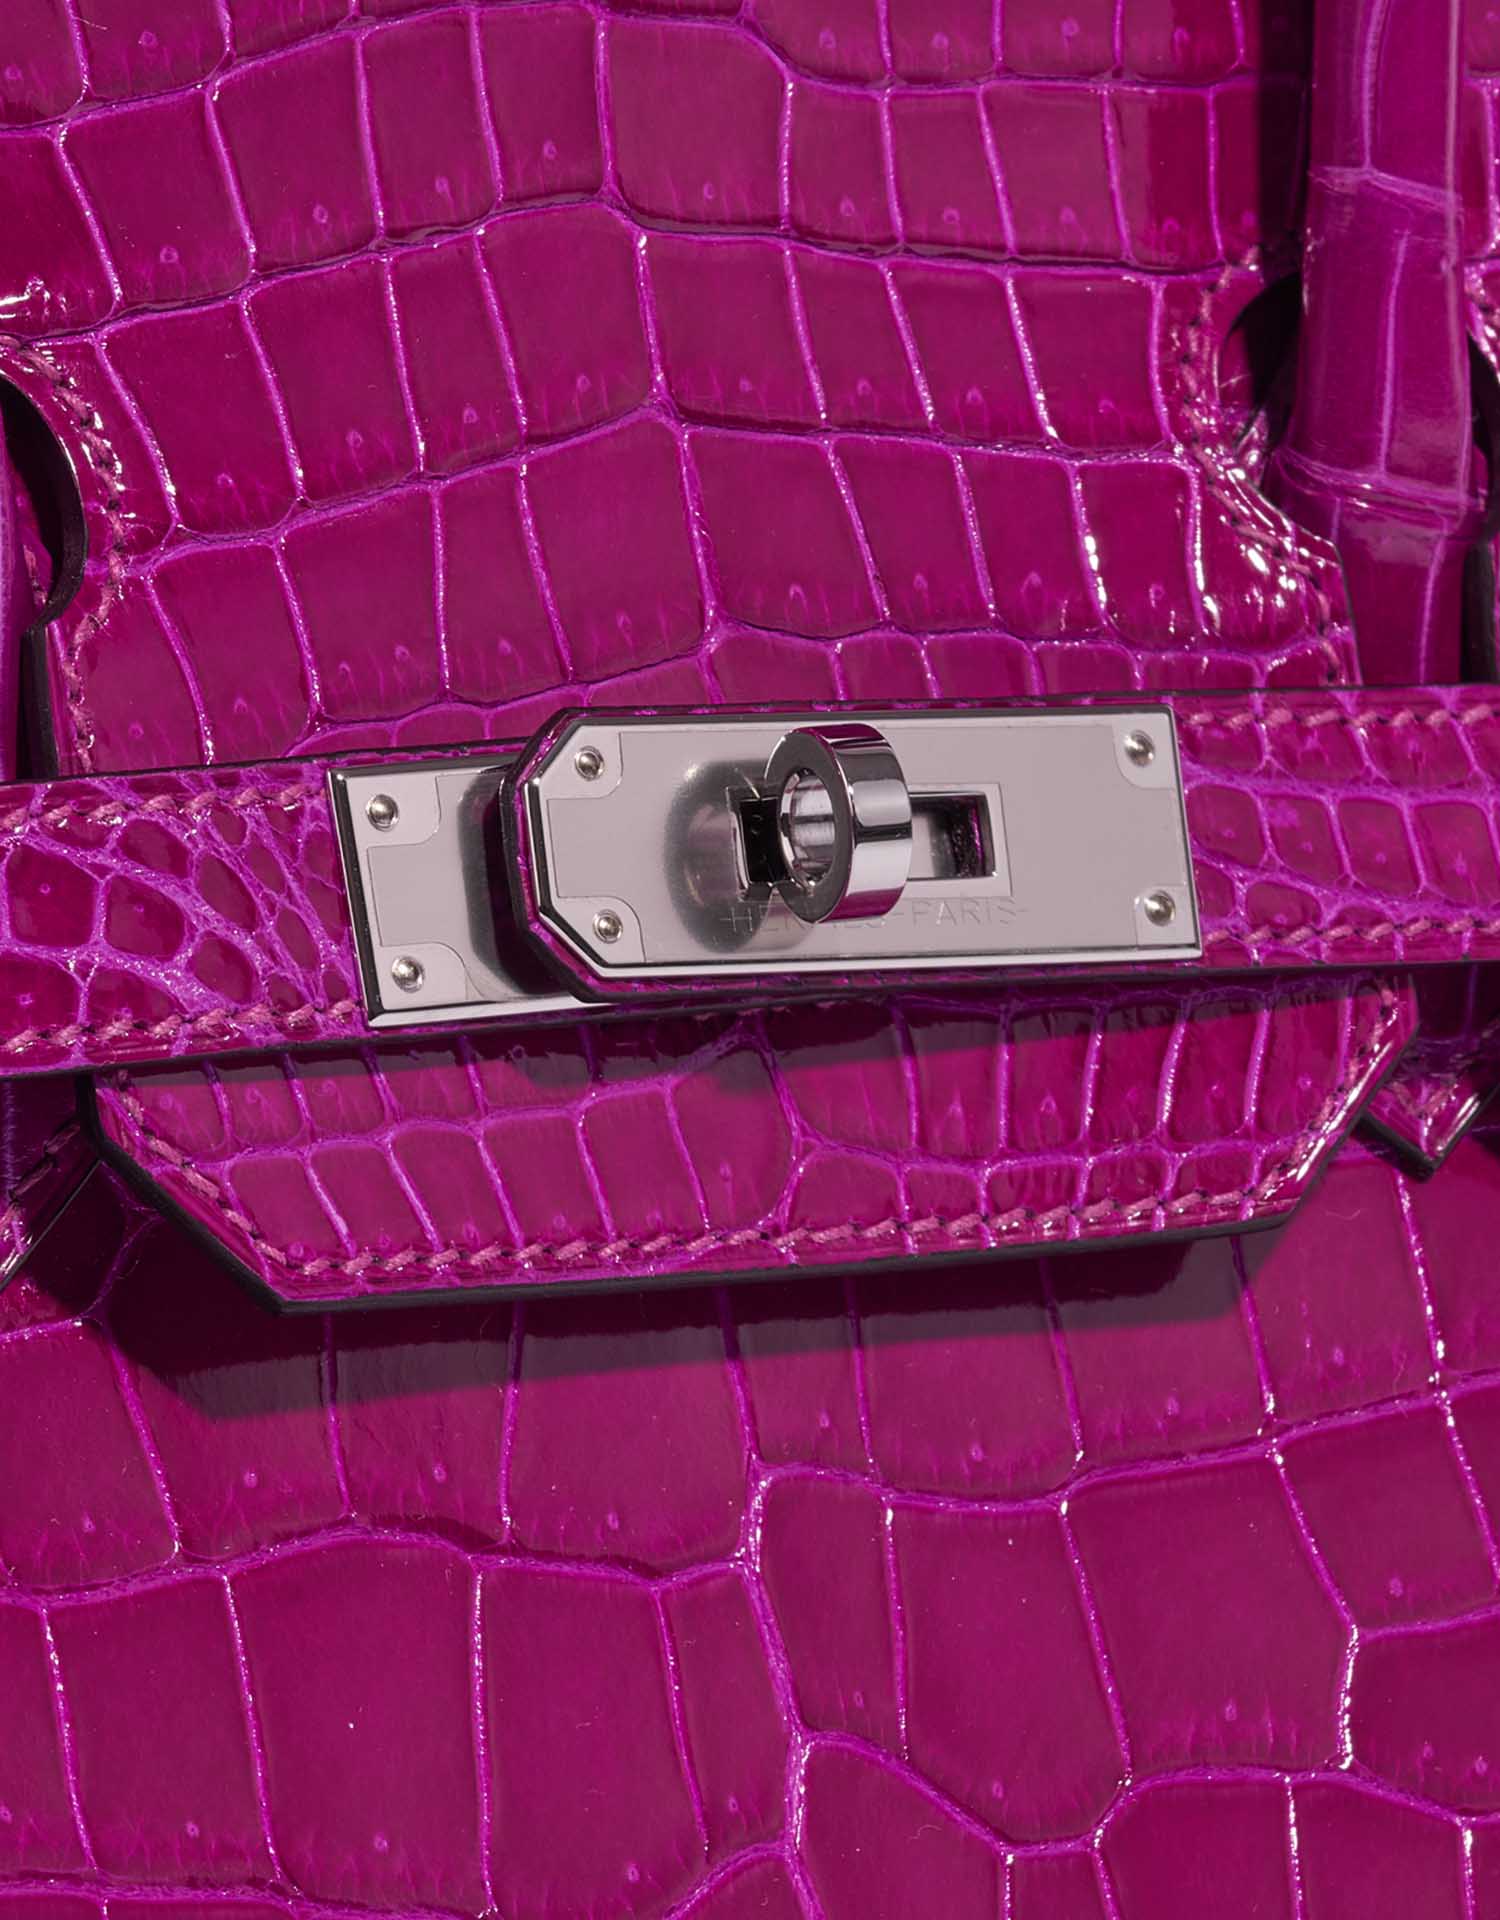 Hermès Birkin 30 Rose Pourpre Shiny Porosus Crocodile Palladium Hardware